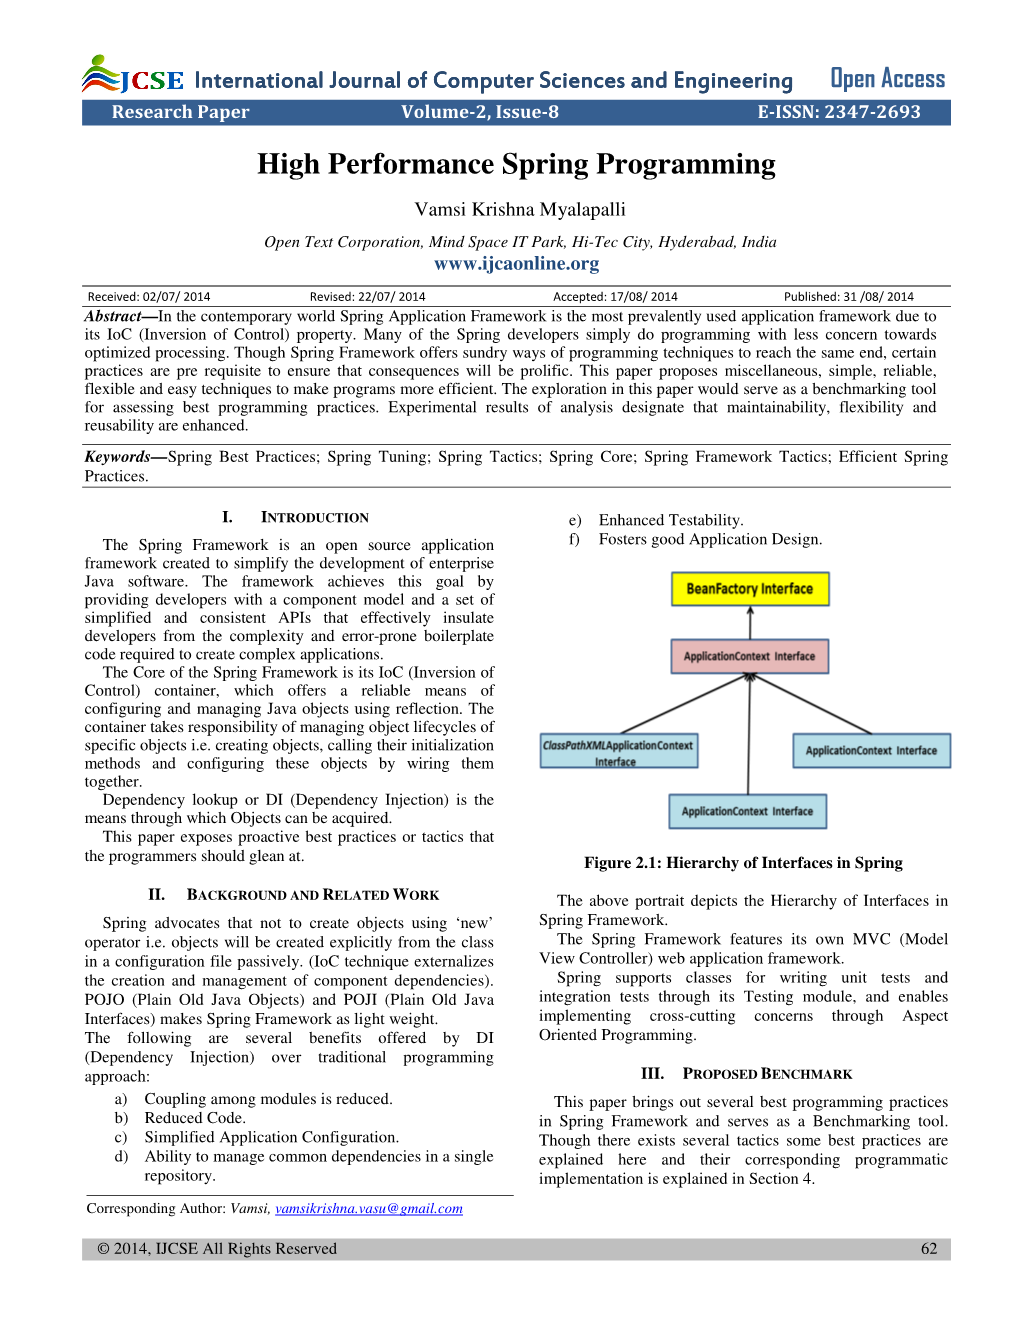 High Performance Spring Programming